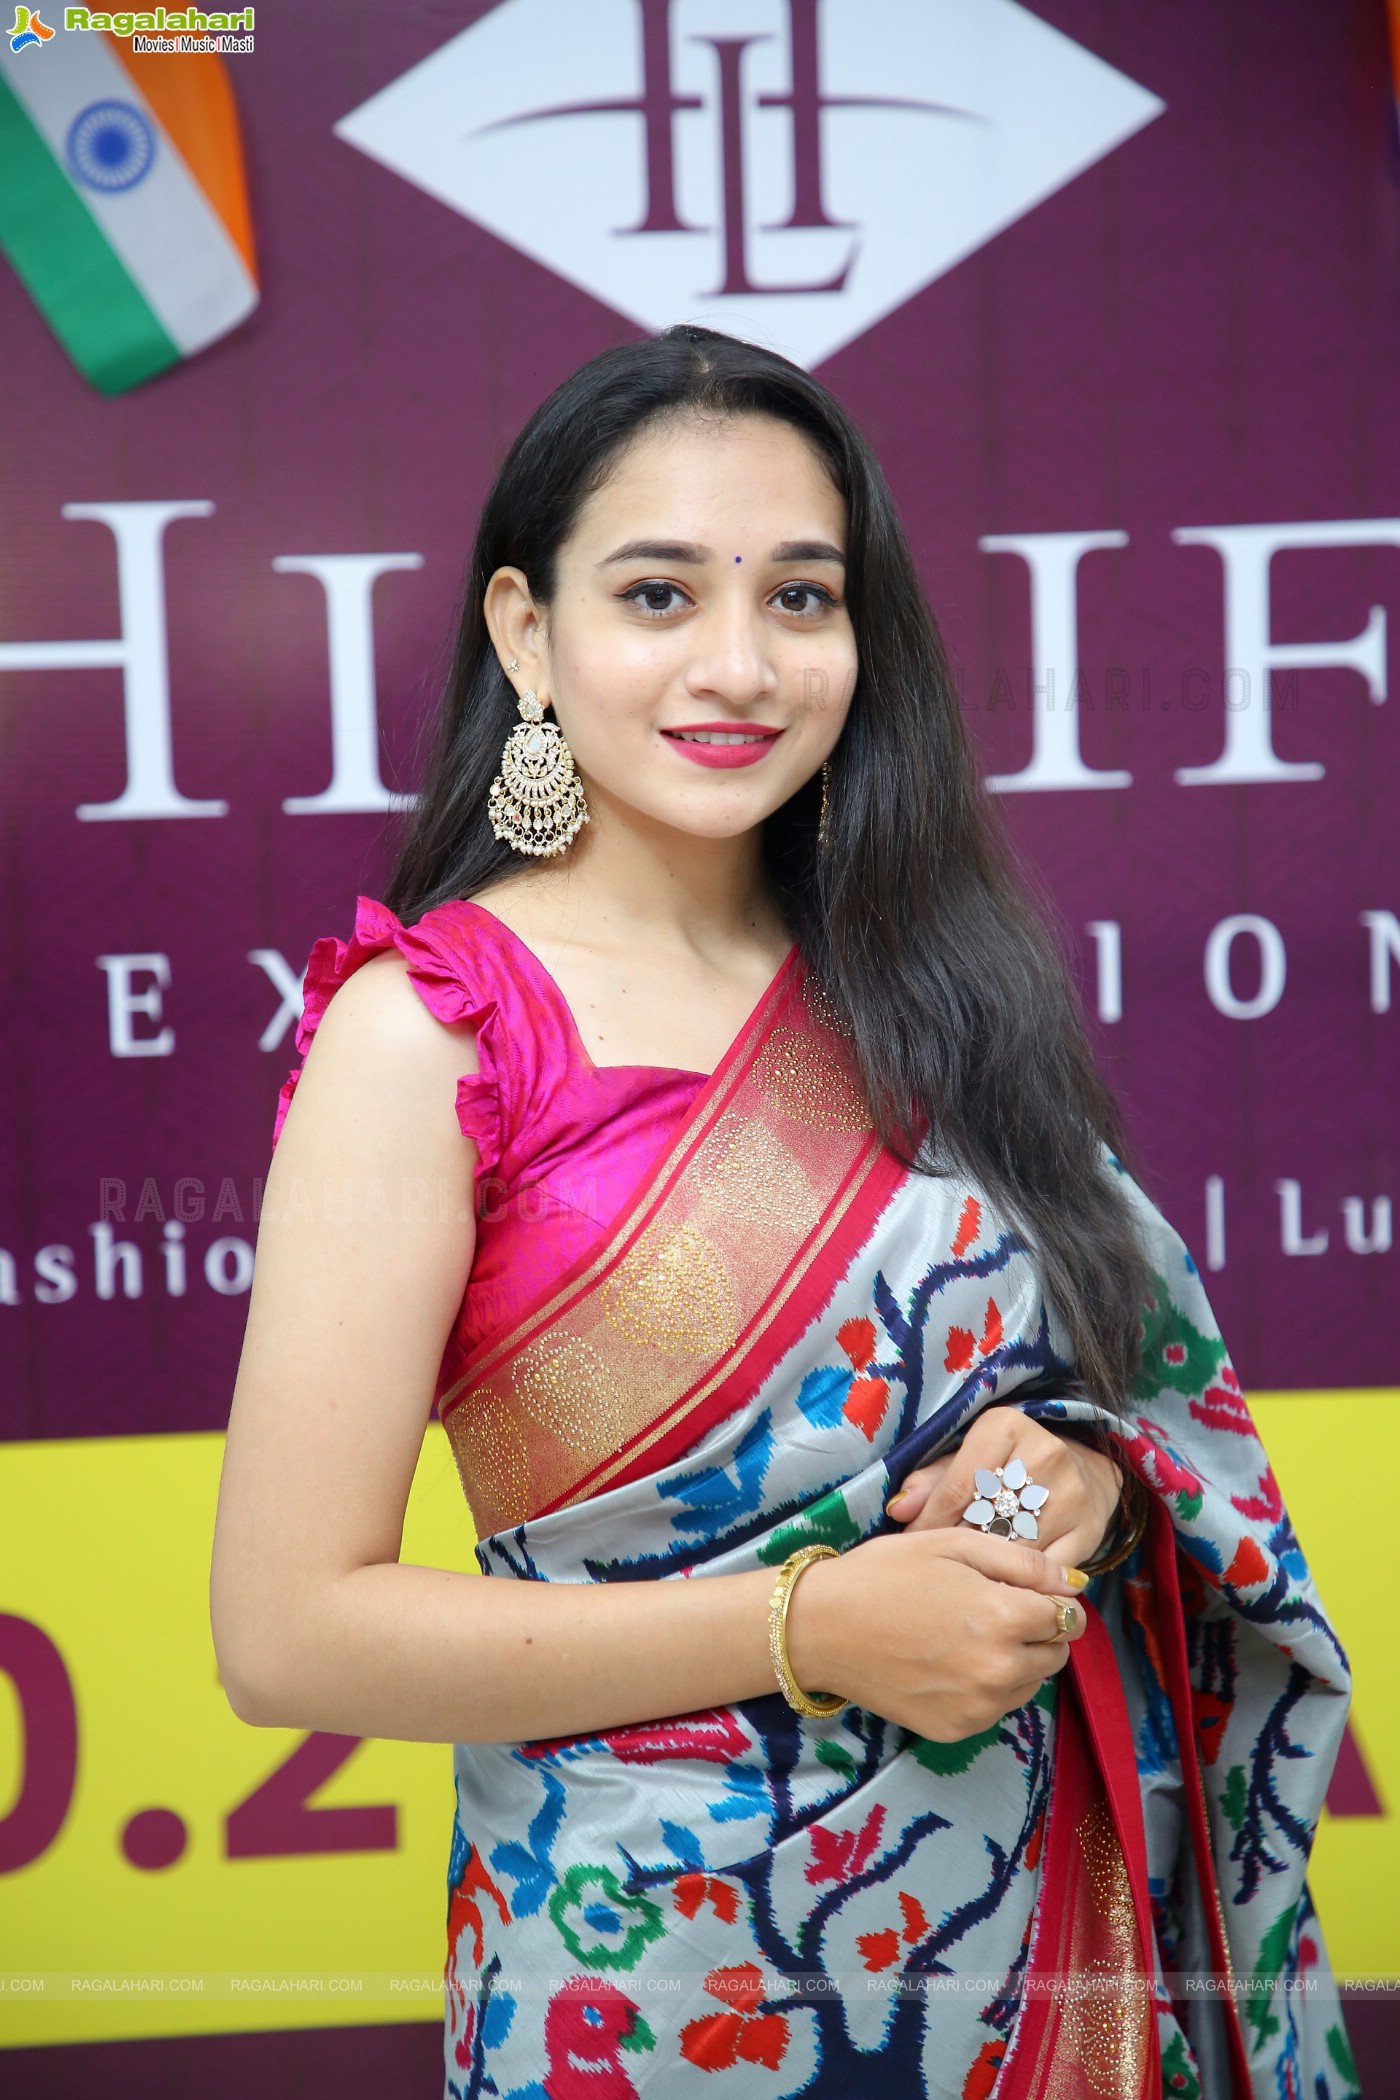 Hi Life Exhibition August 2022 Curtain Raiser and Fashion Showcase, Hyderabad